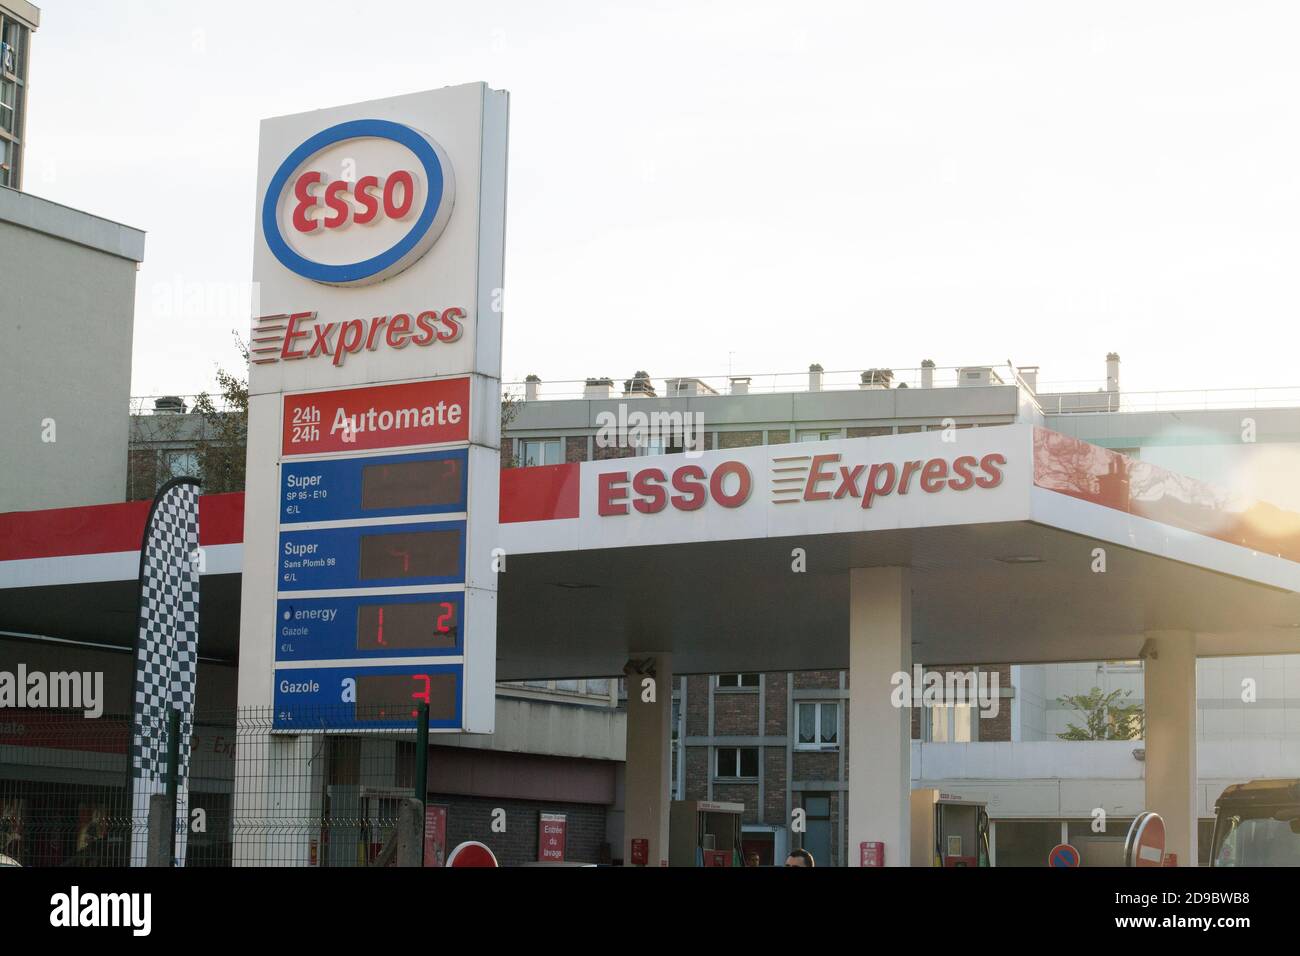 Esso petrol station in Gentilly near Paris Stock Photo - Alamy